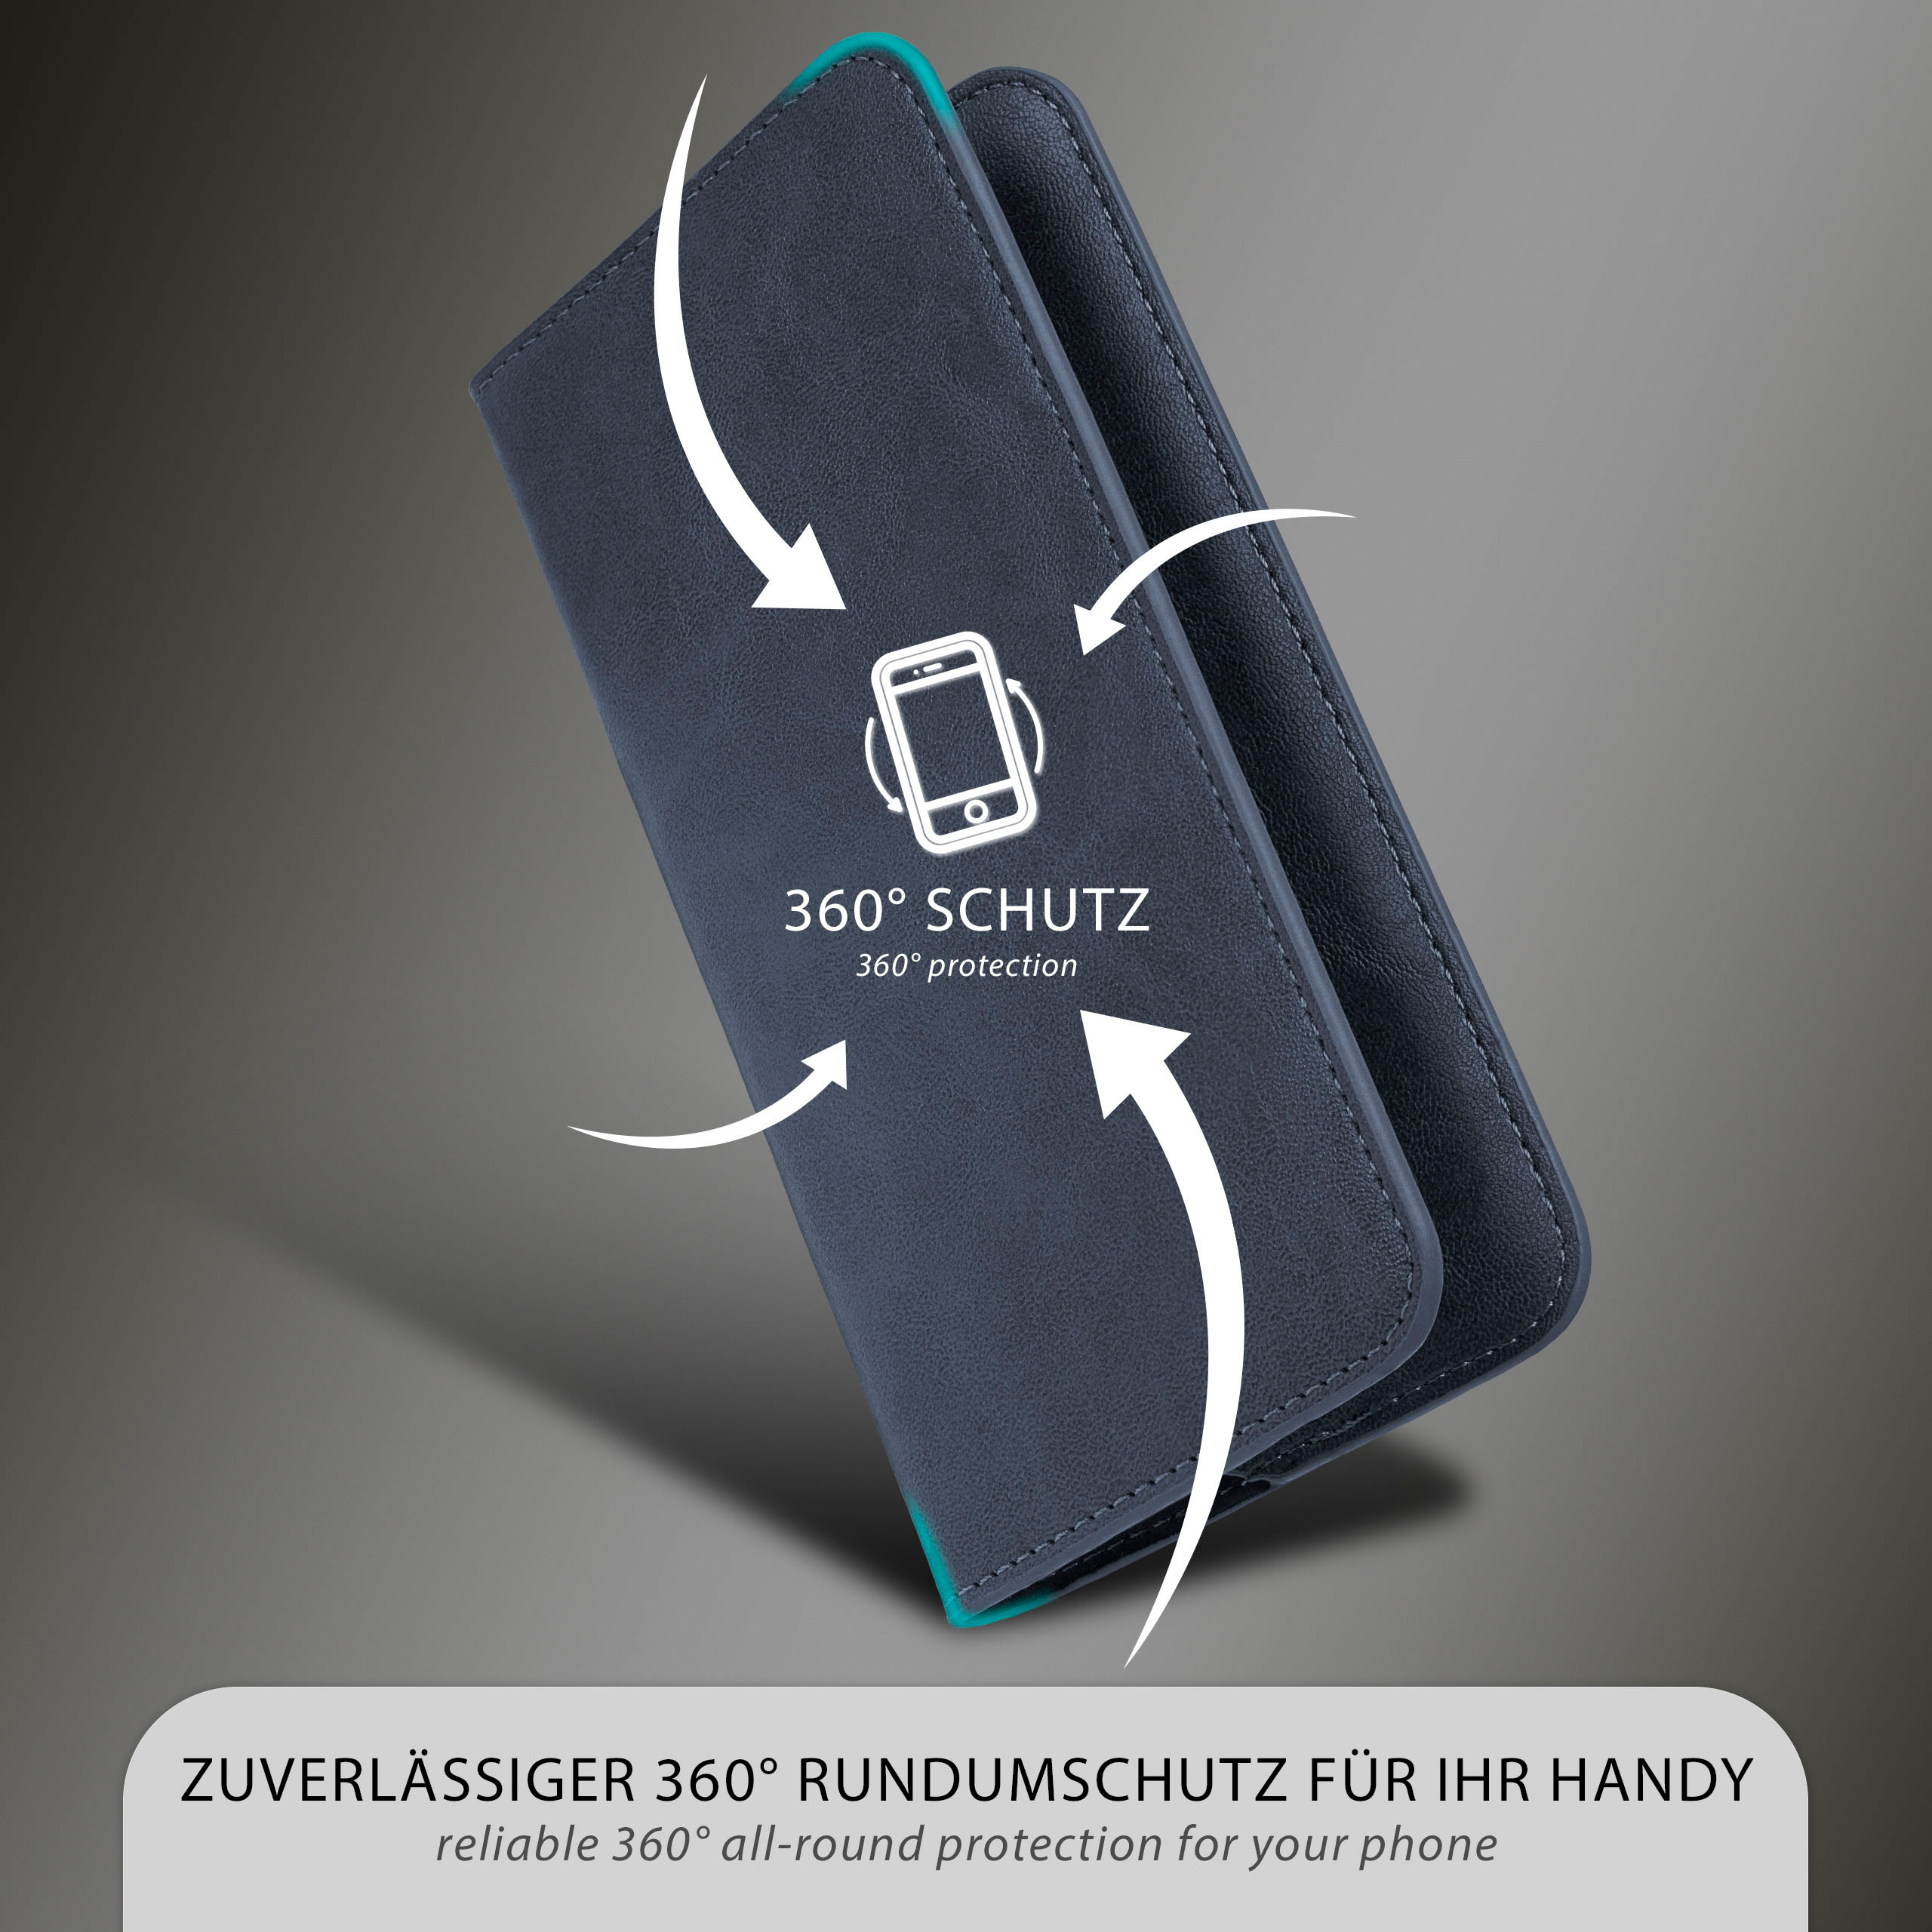 MOEX Purse Case, Dunkelblau Galaxy Flip S8, Cover, Samsung